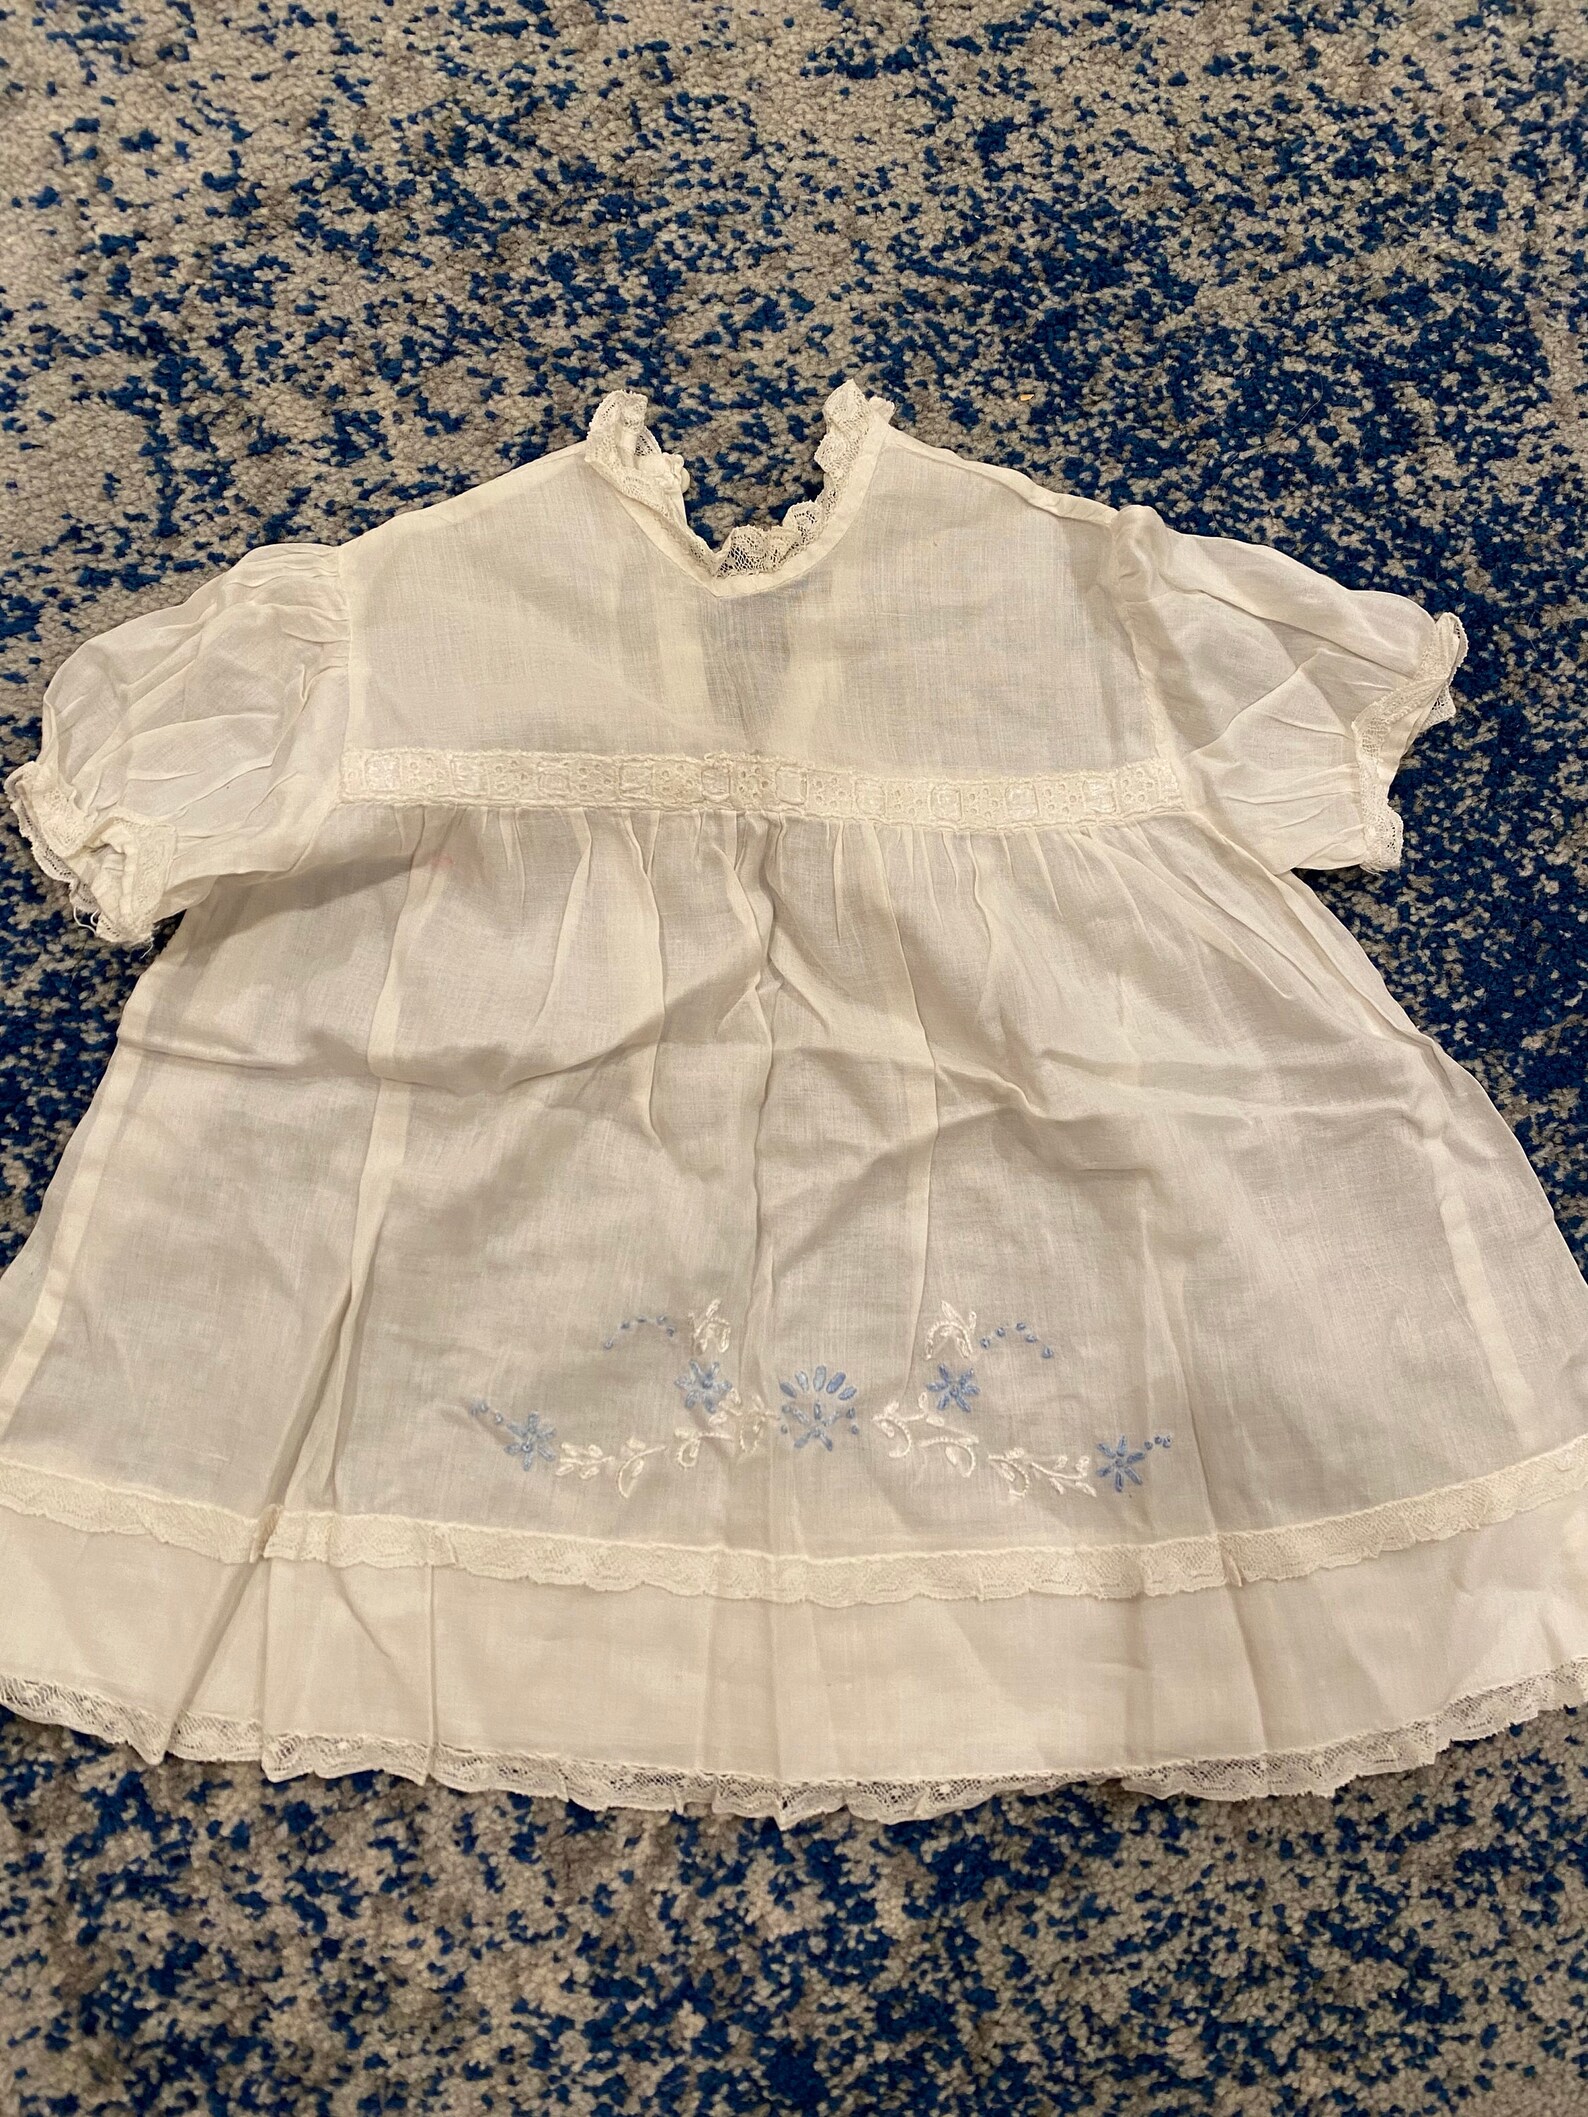 1950's Vintage Baby girl dress | Etsy